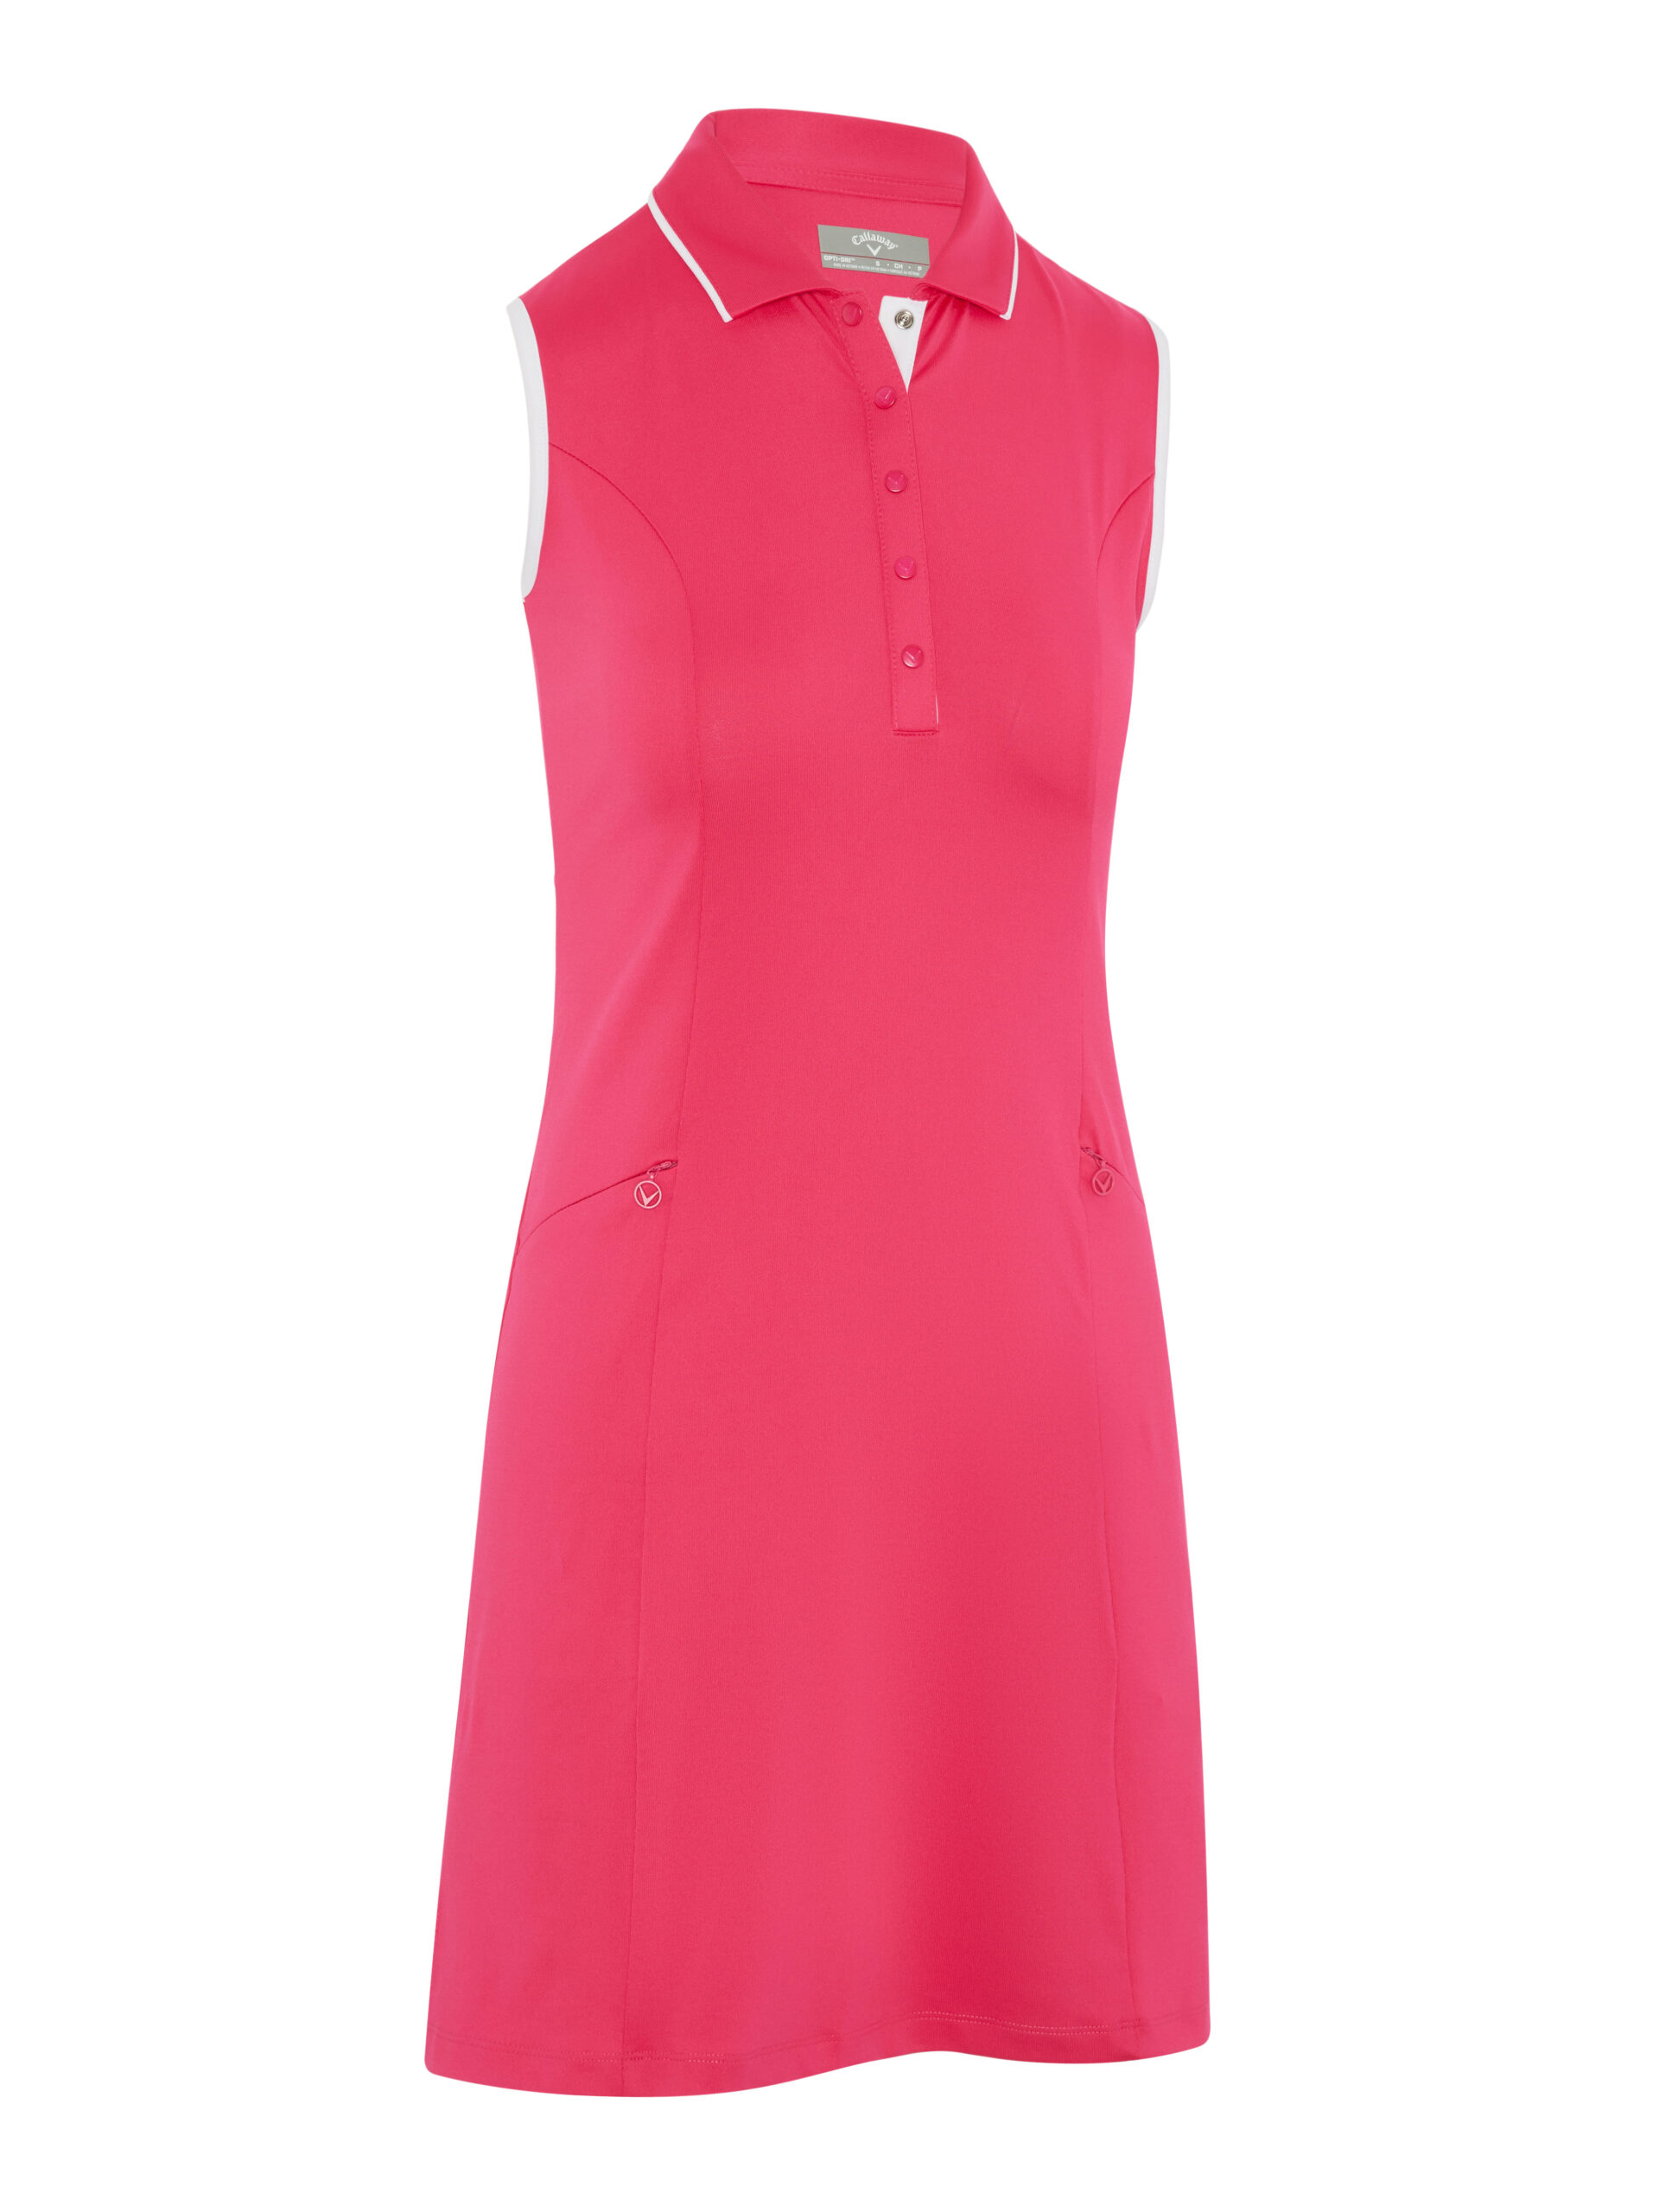 Callaway dámské golfové šaty, růžové, vel. M